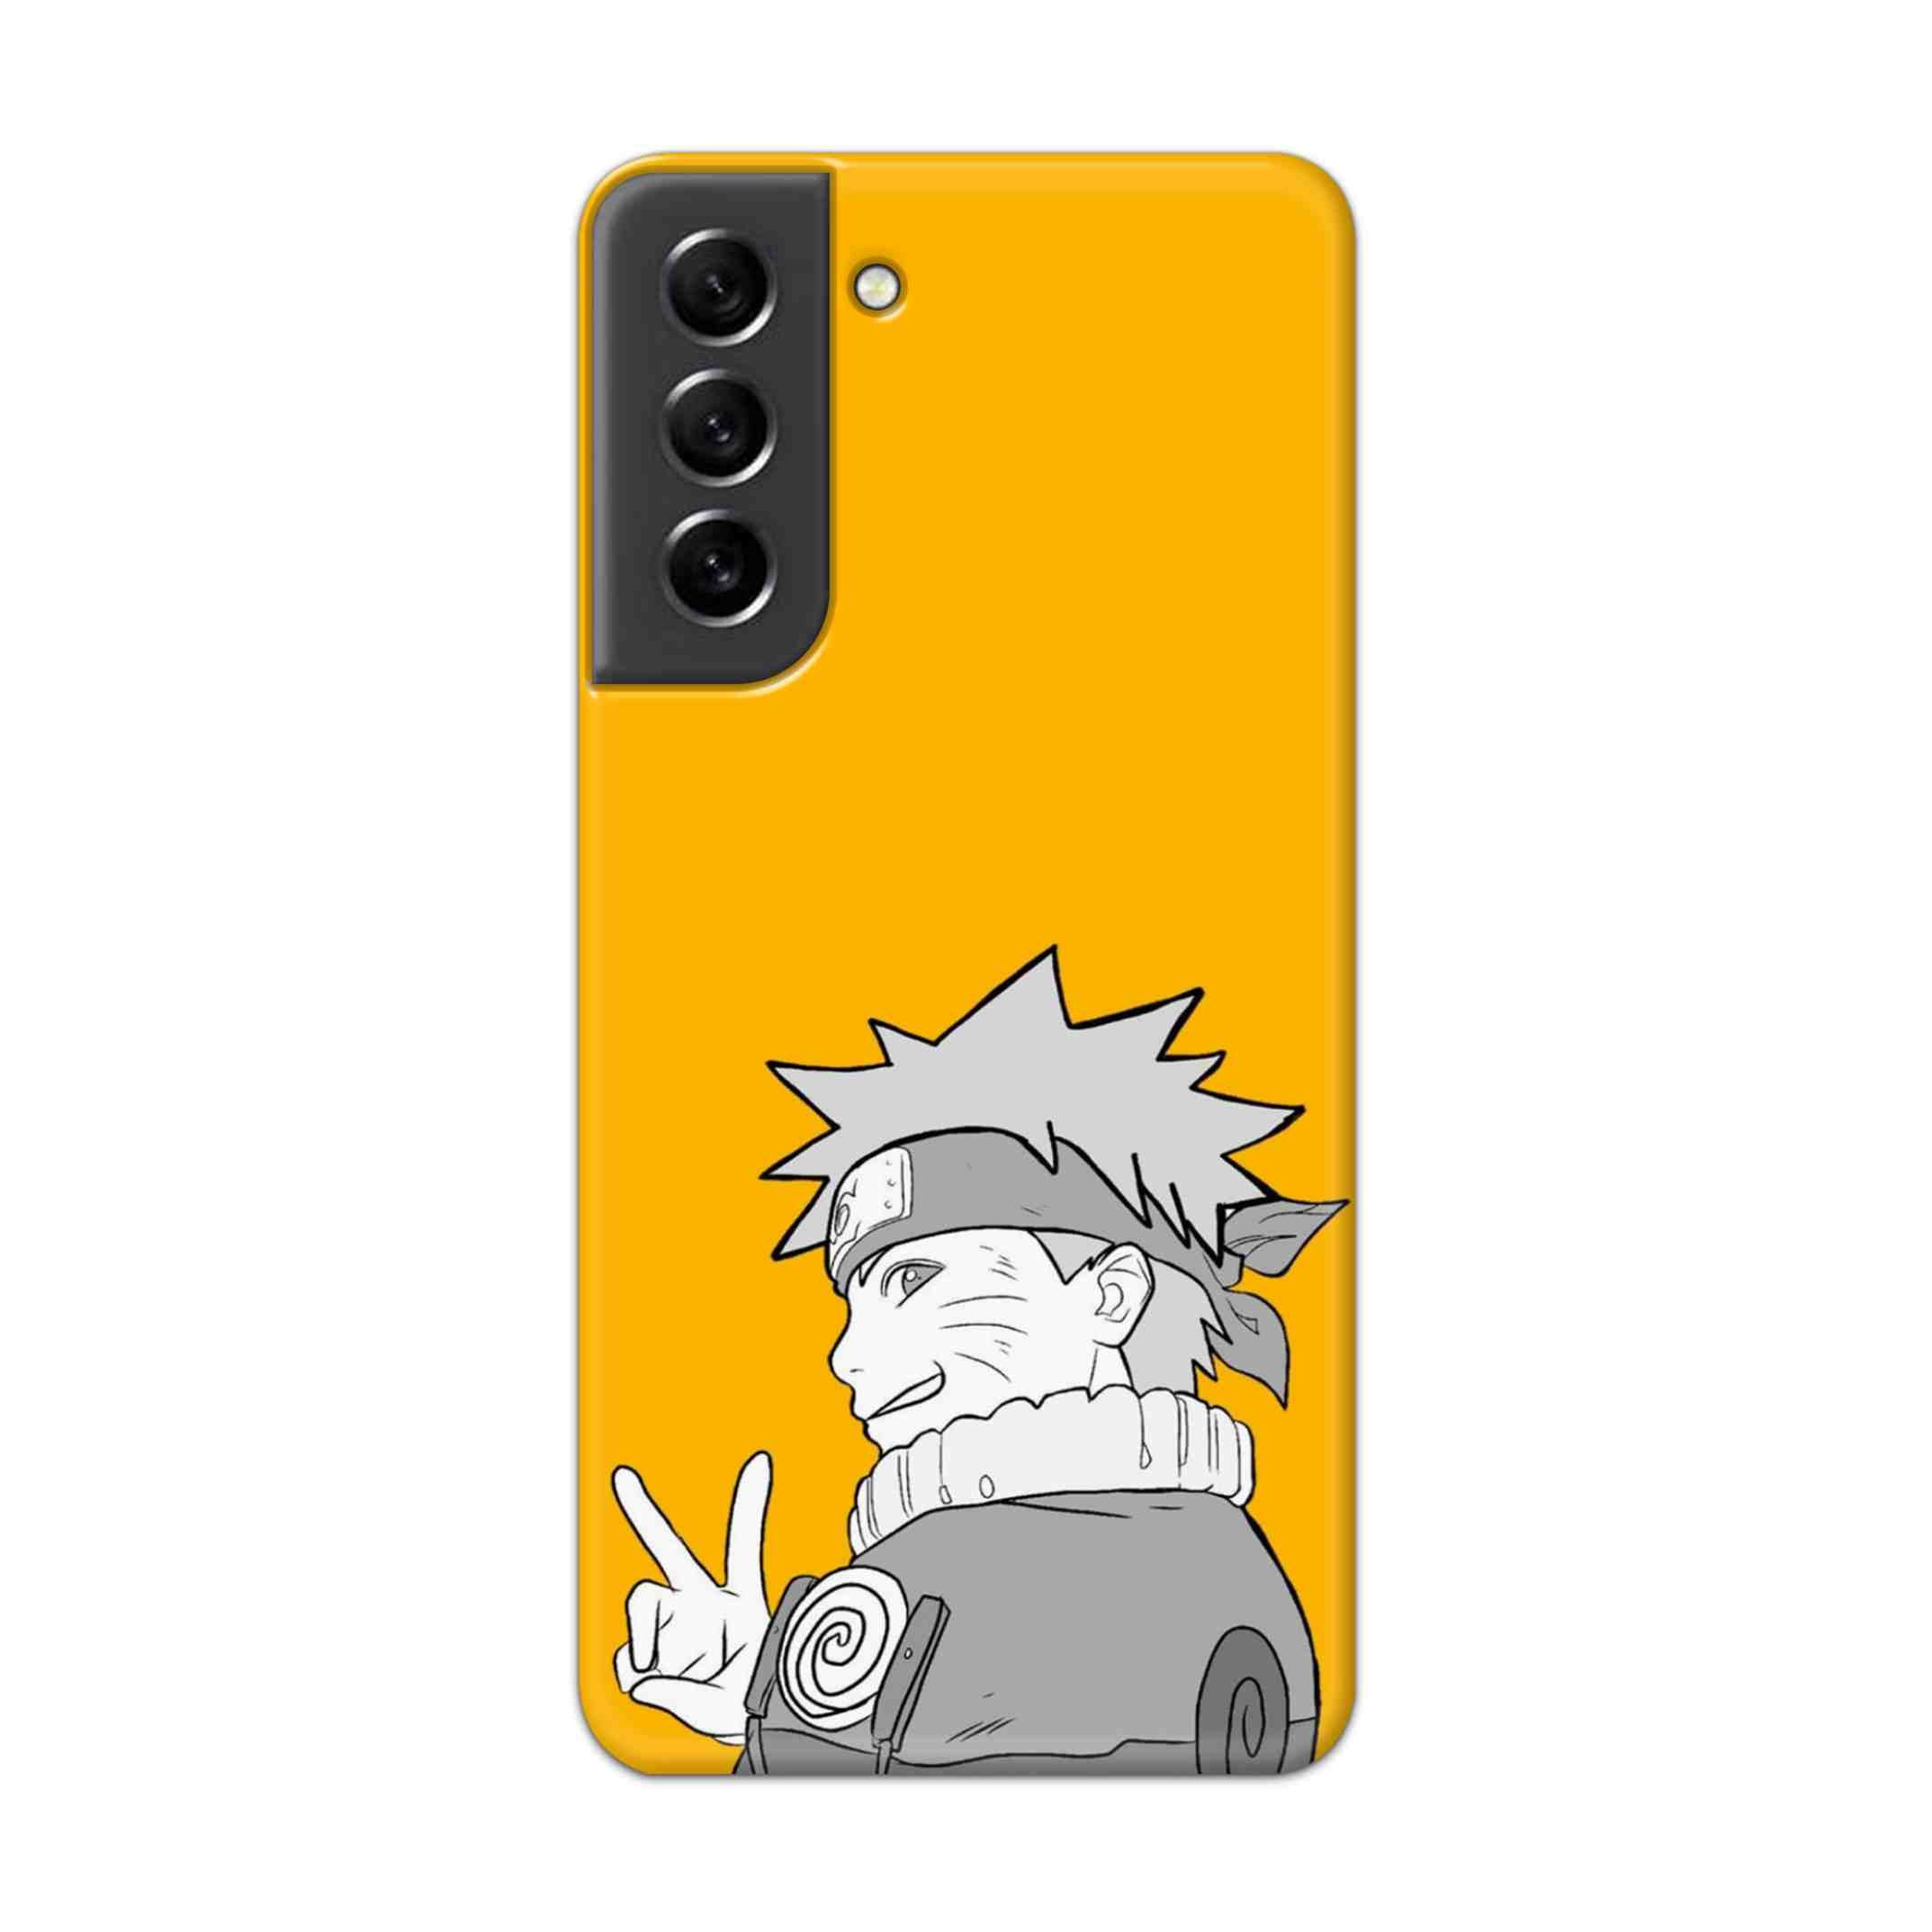 Buy White Naruto Hard Back Mobile Phone Case Cover For Samsung S21 FE Online